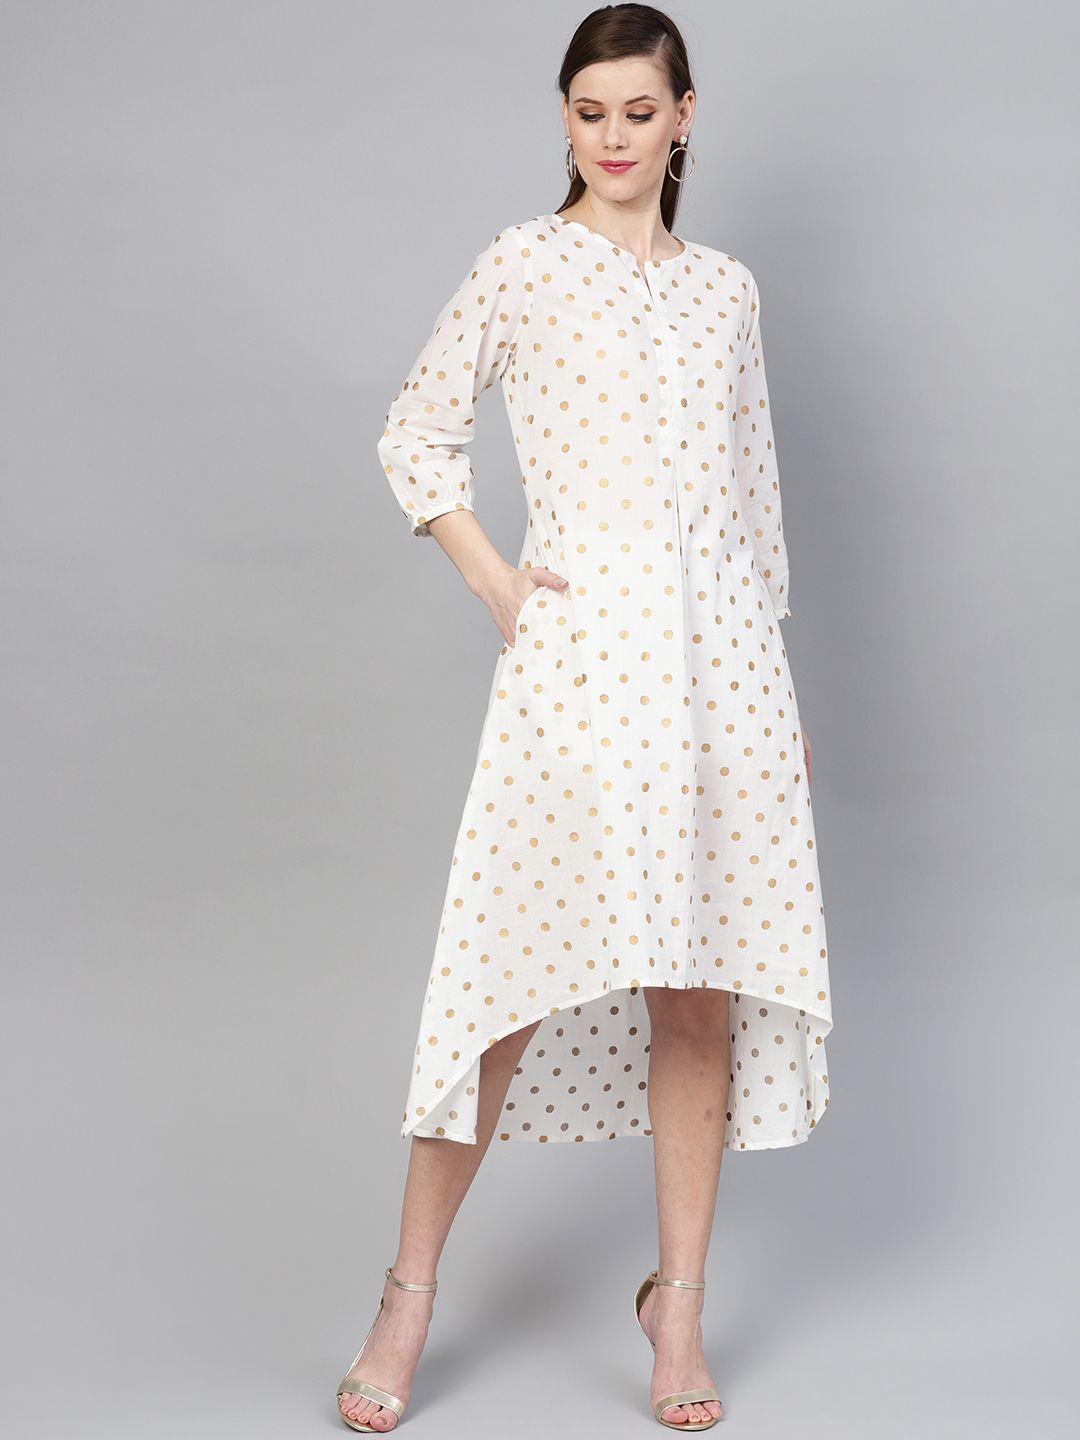 Varanga Women White Polka Dots Printed A-Line Dress Price in India